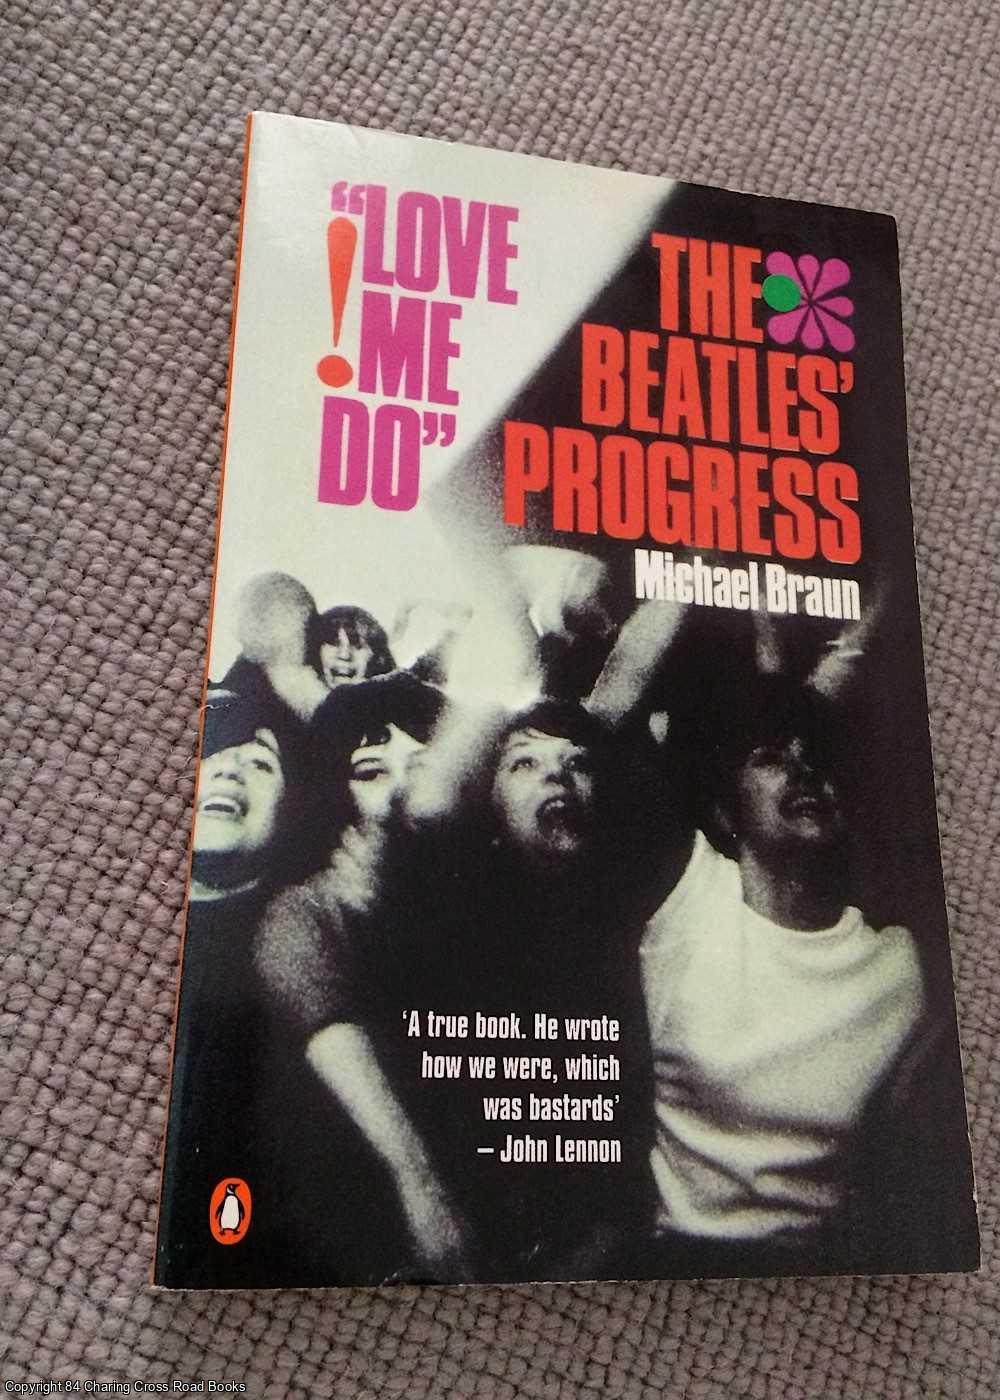 Braun, Michael - Love me do: The Beatles' progress